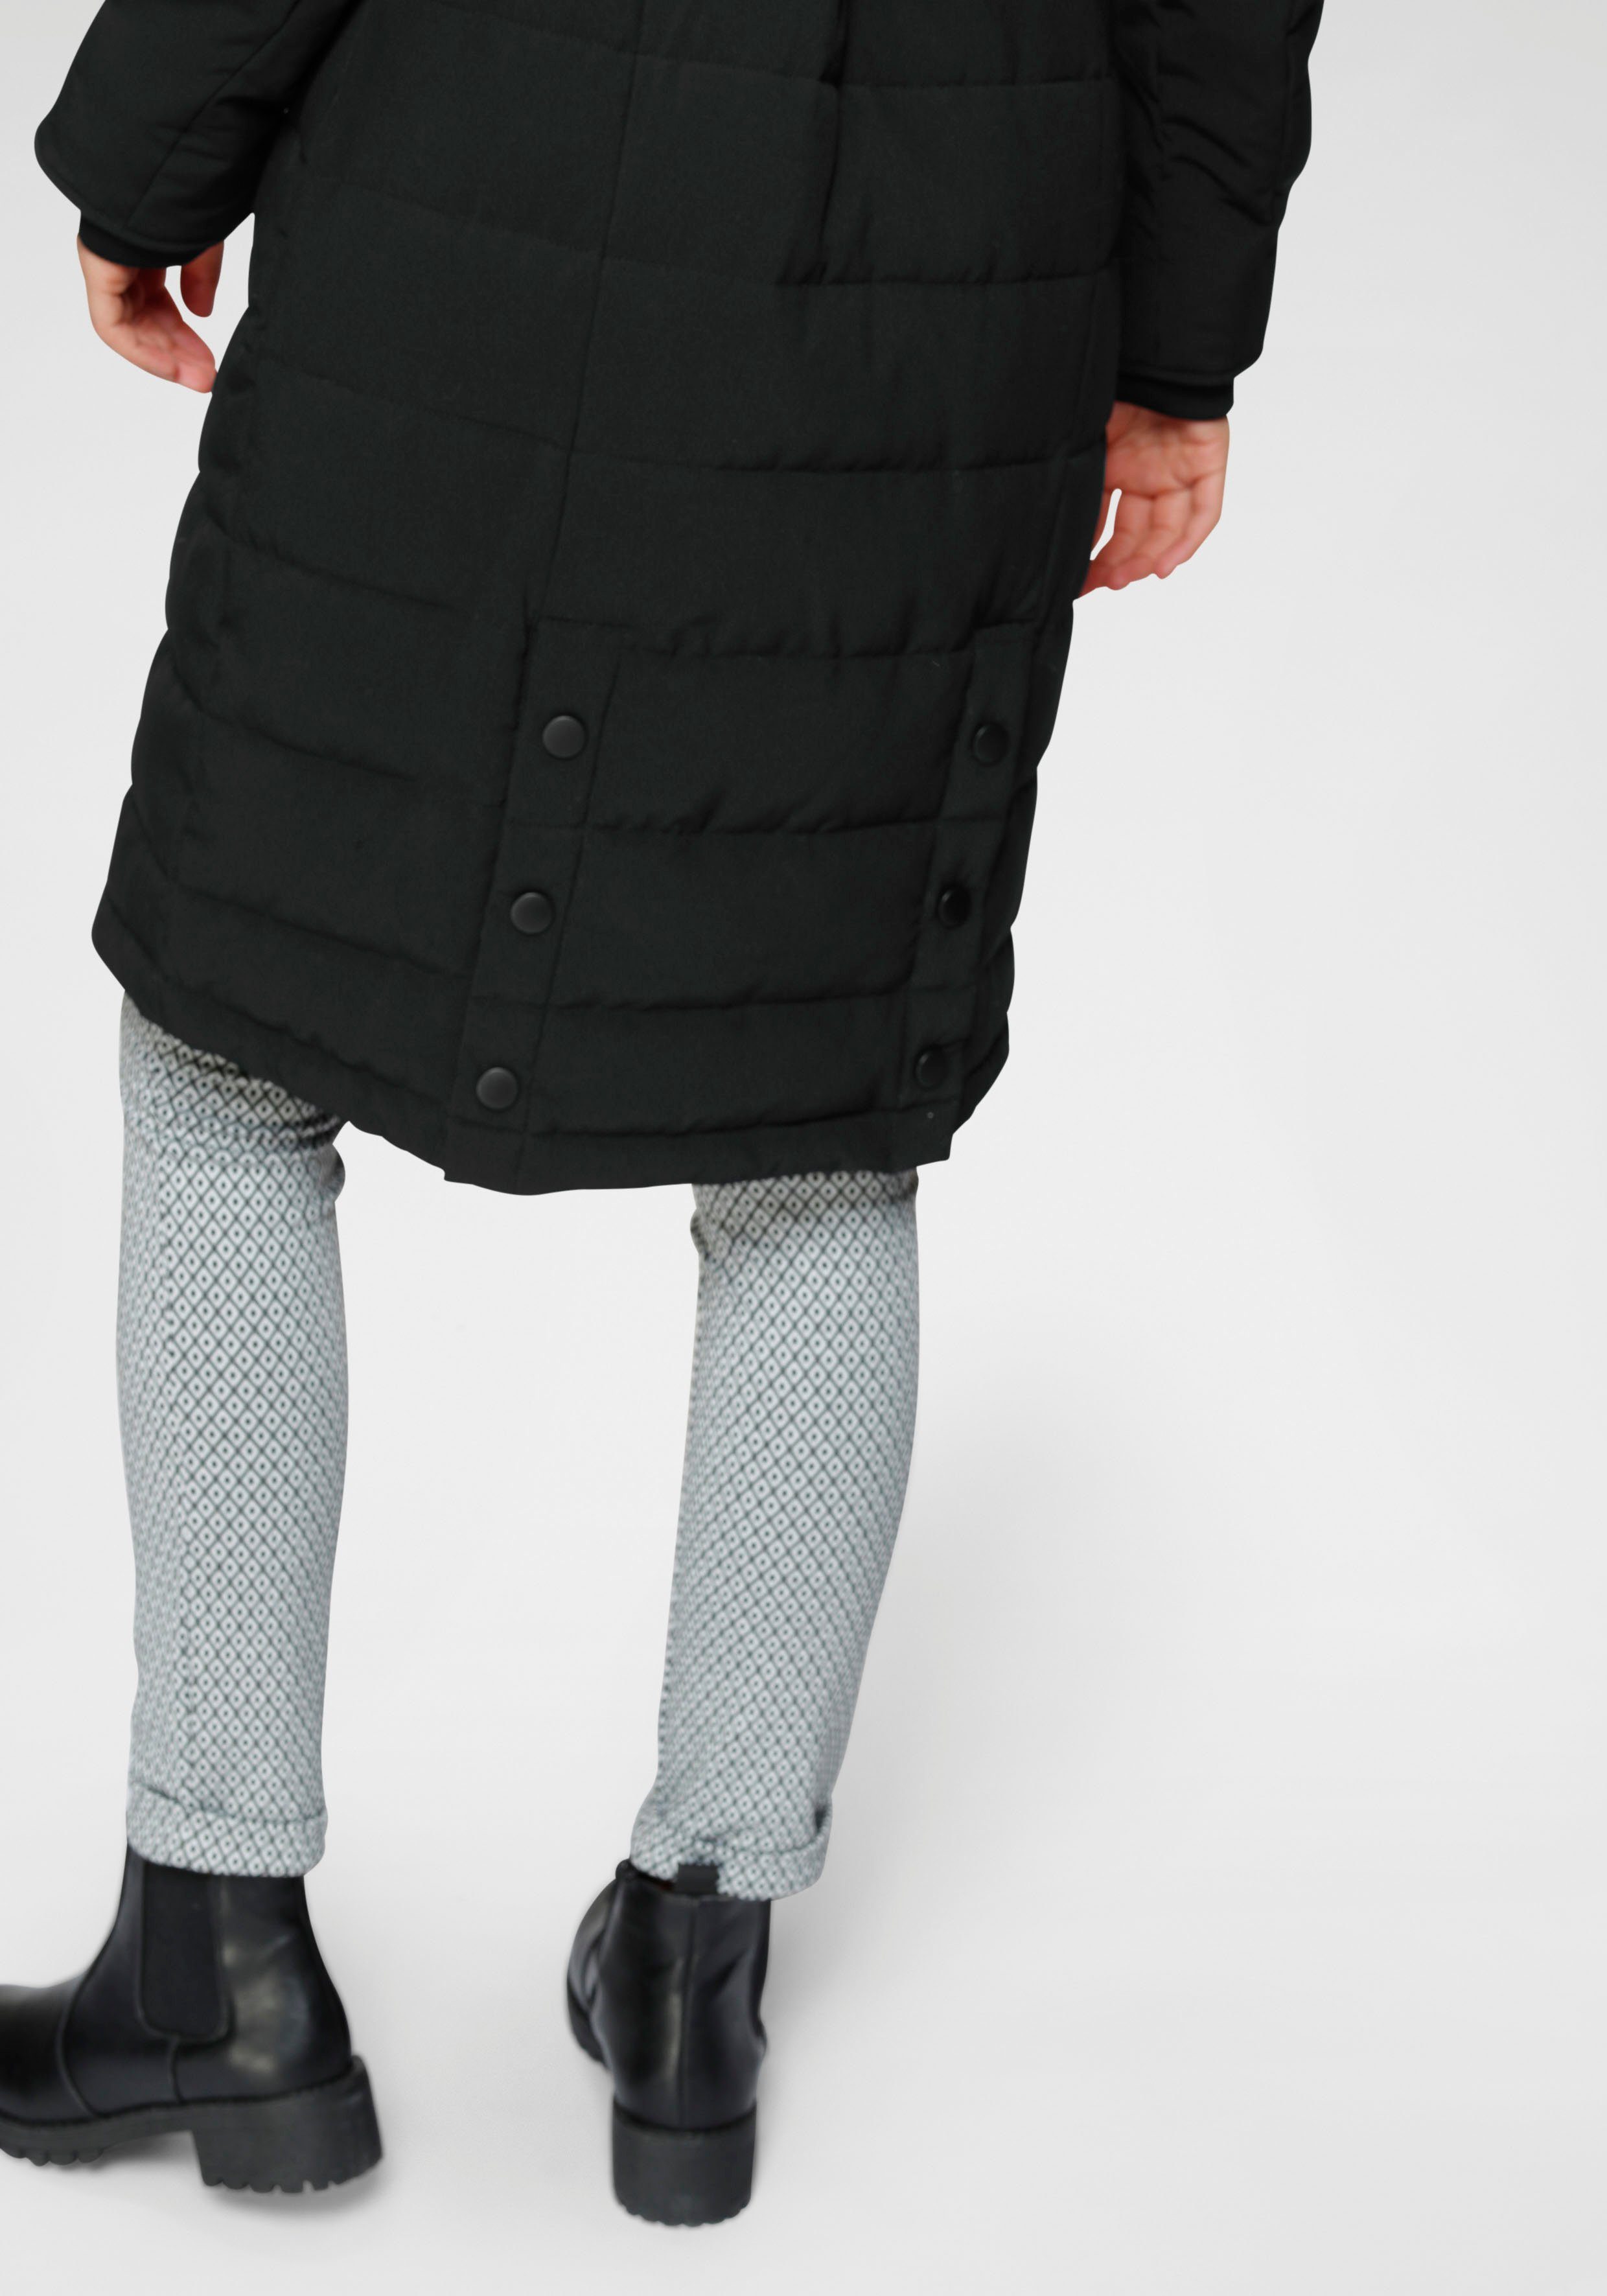 ALPENBLITZ Steppmantel Oslo long aus Markenprägung Material) Mantel auf black dem Gürtel Kuschel-Kapuze (Jacke nachhaltigem & abnehmbarer mit